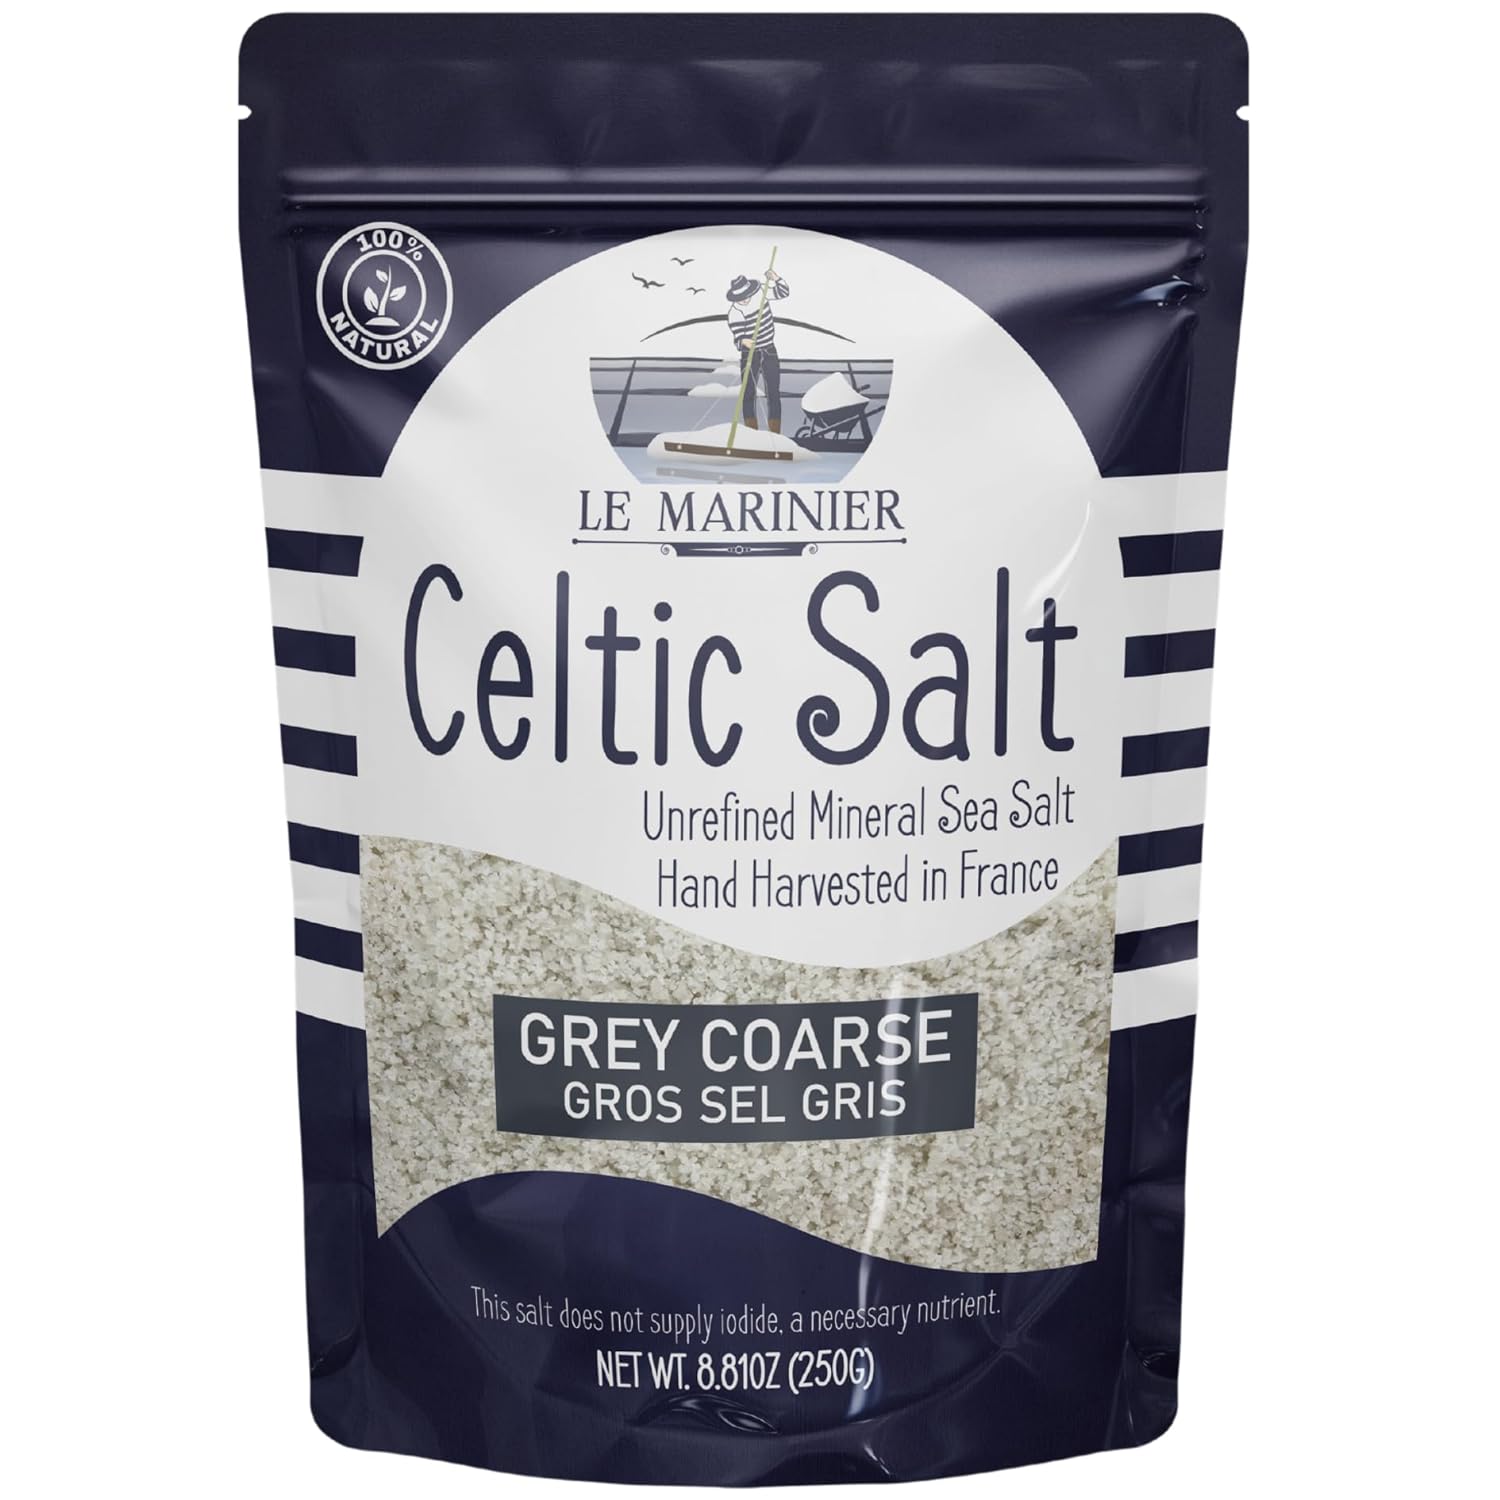 Le Marinier Celtic Salt Grey Coarse - 8.81oz / 250g